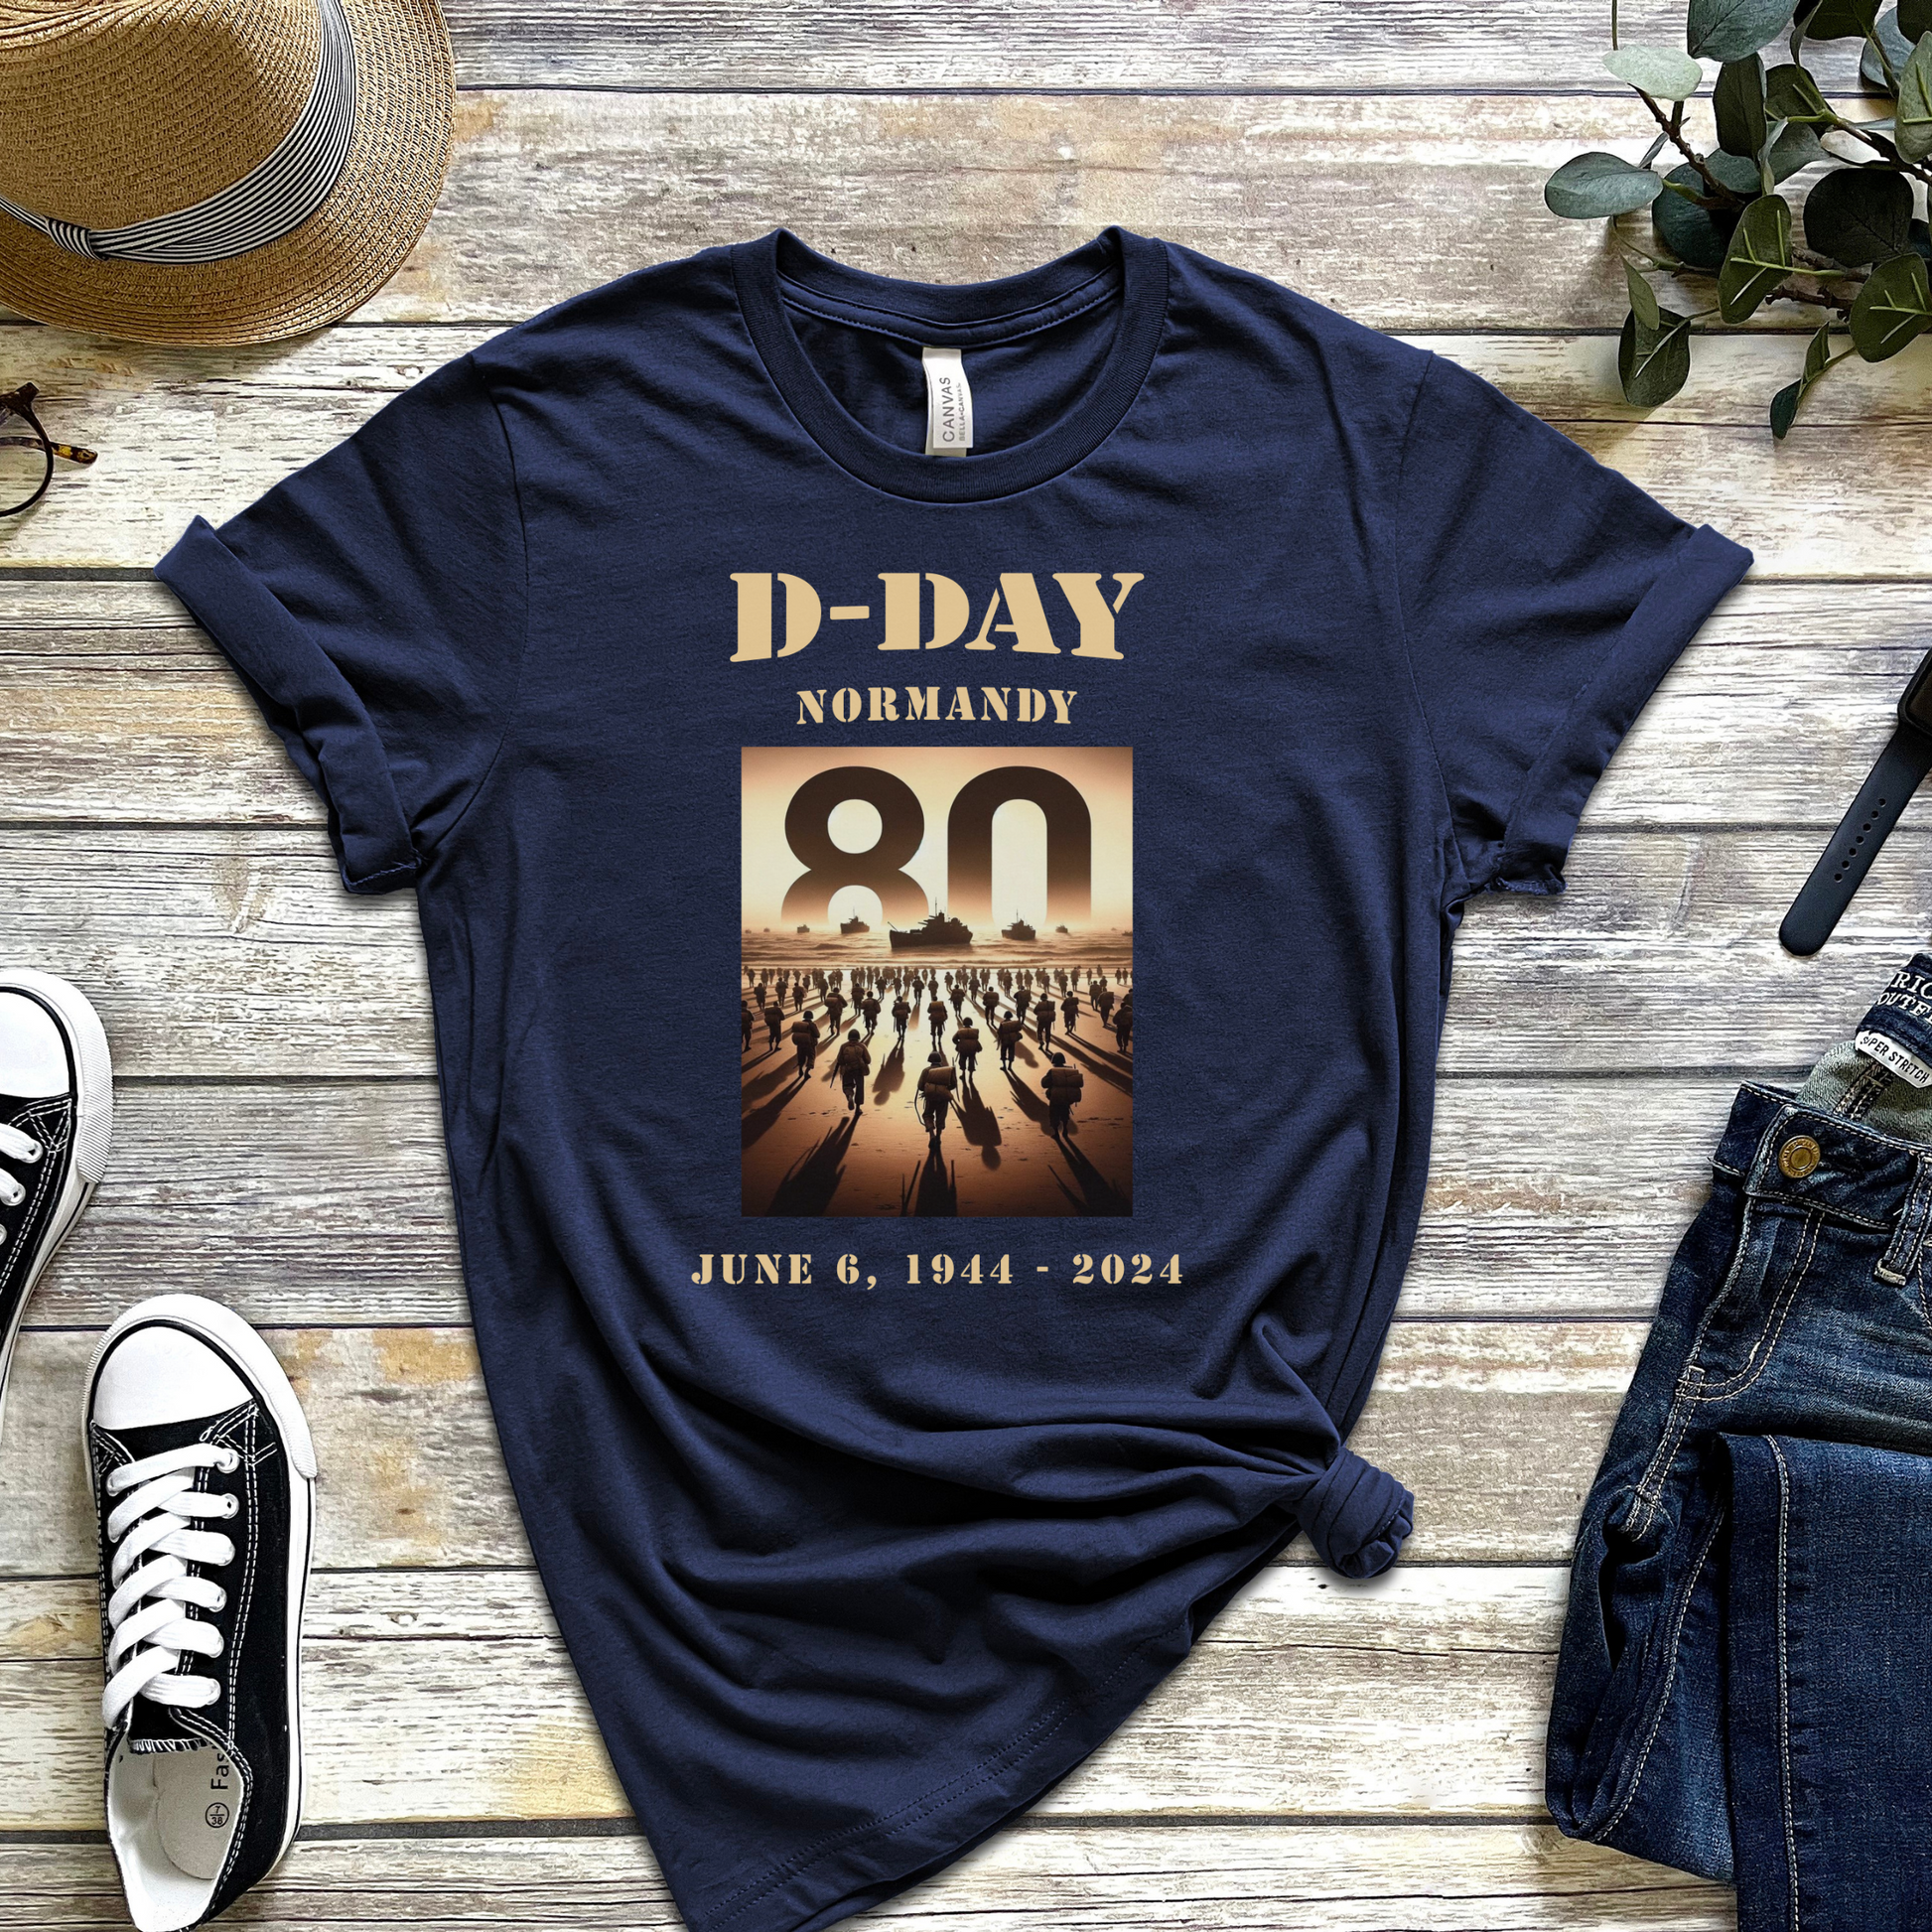 D-Day Normandy 80th Anniversary T-Shirt - Military History Tee - Mardonyx T-Shirt XS / Navy